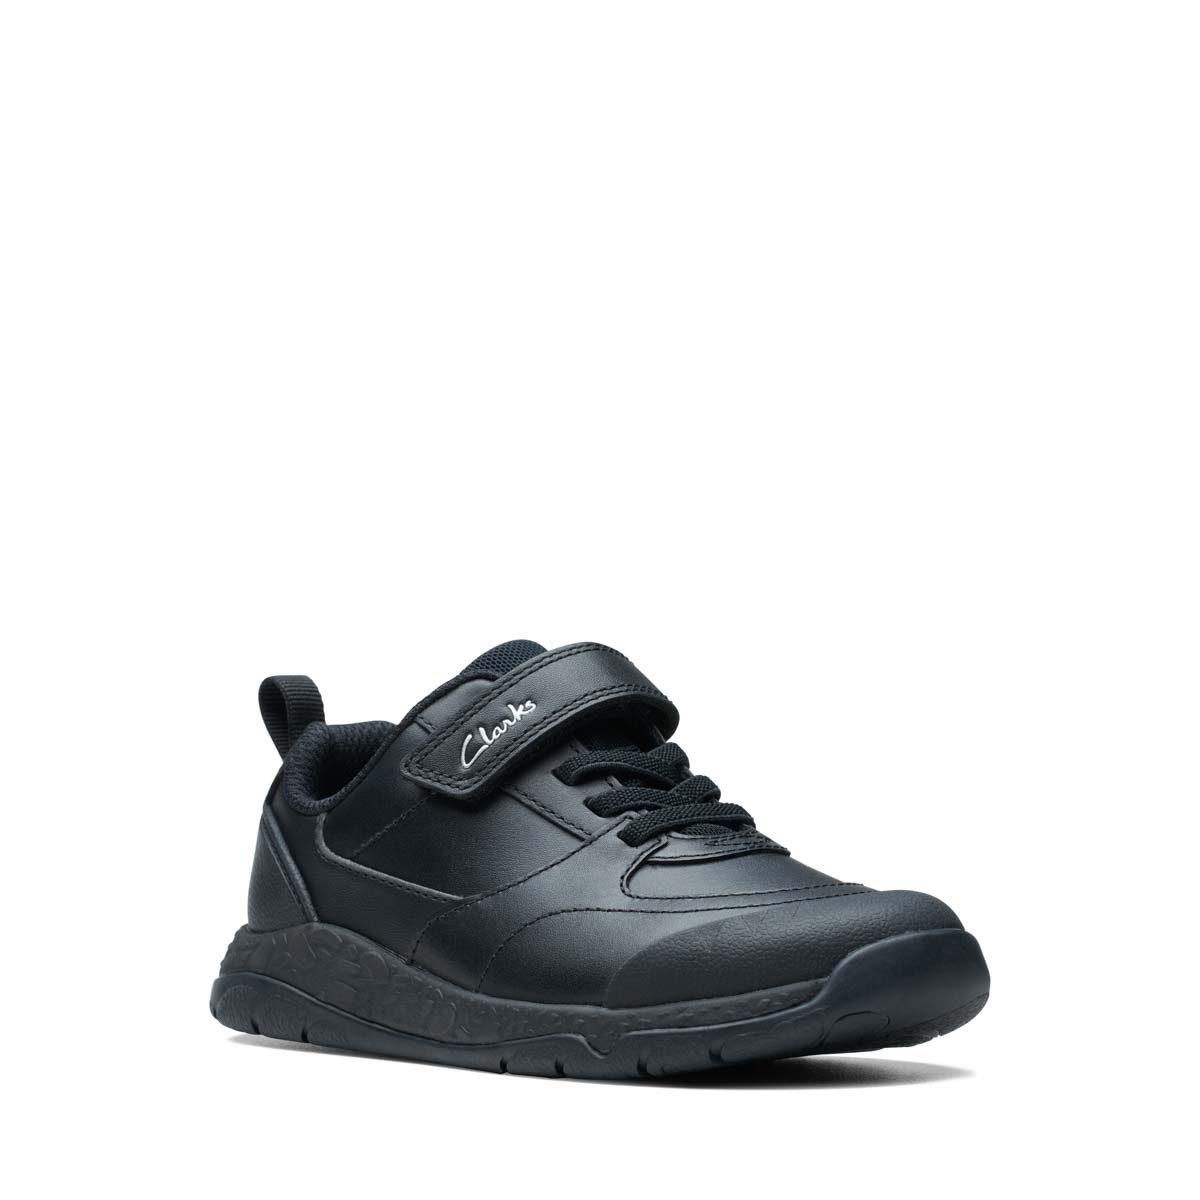 Clarks Steggy Stride K Black Leather Kids Boys Shoes 751406F In Size 13 In Plain Black Leather F Width Fitting Regular Fit For School For kids